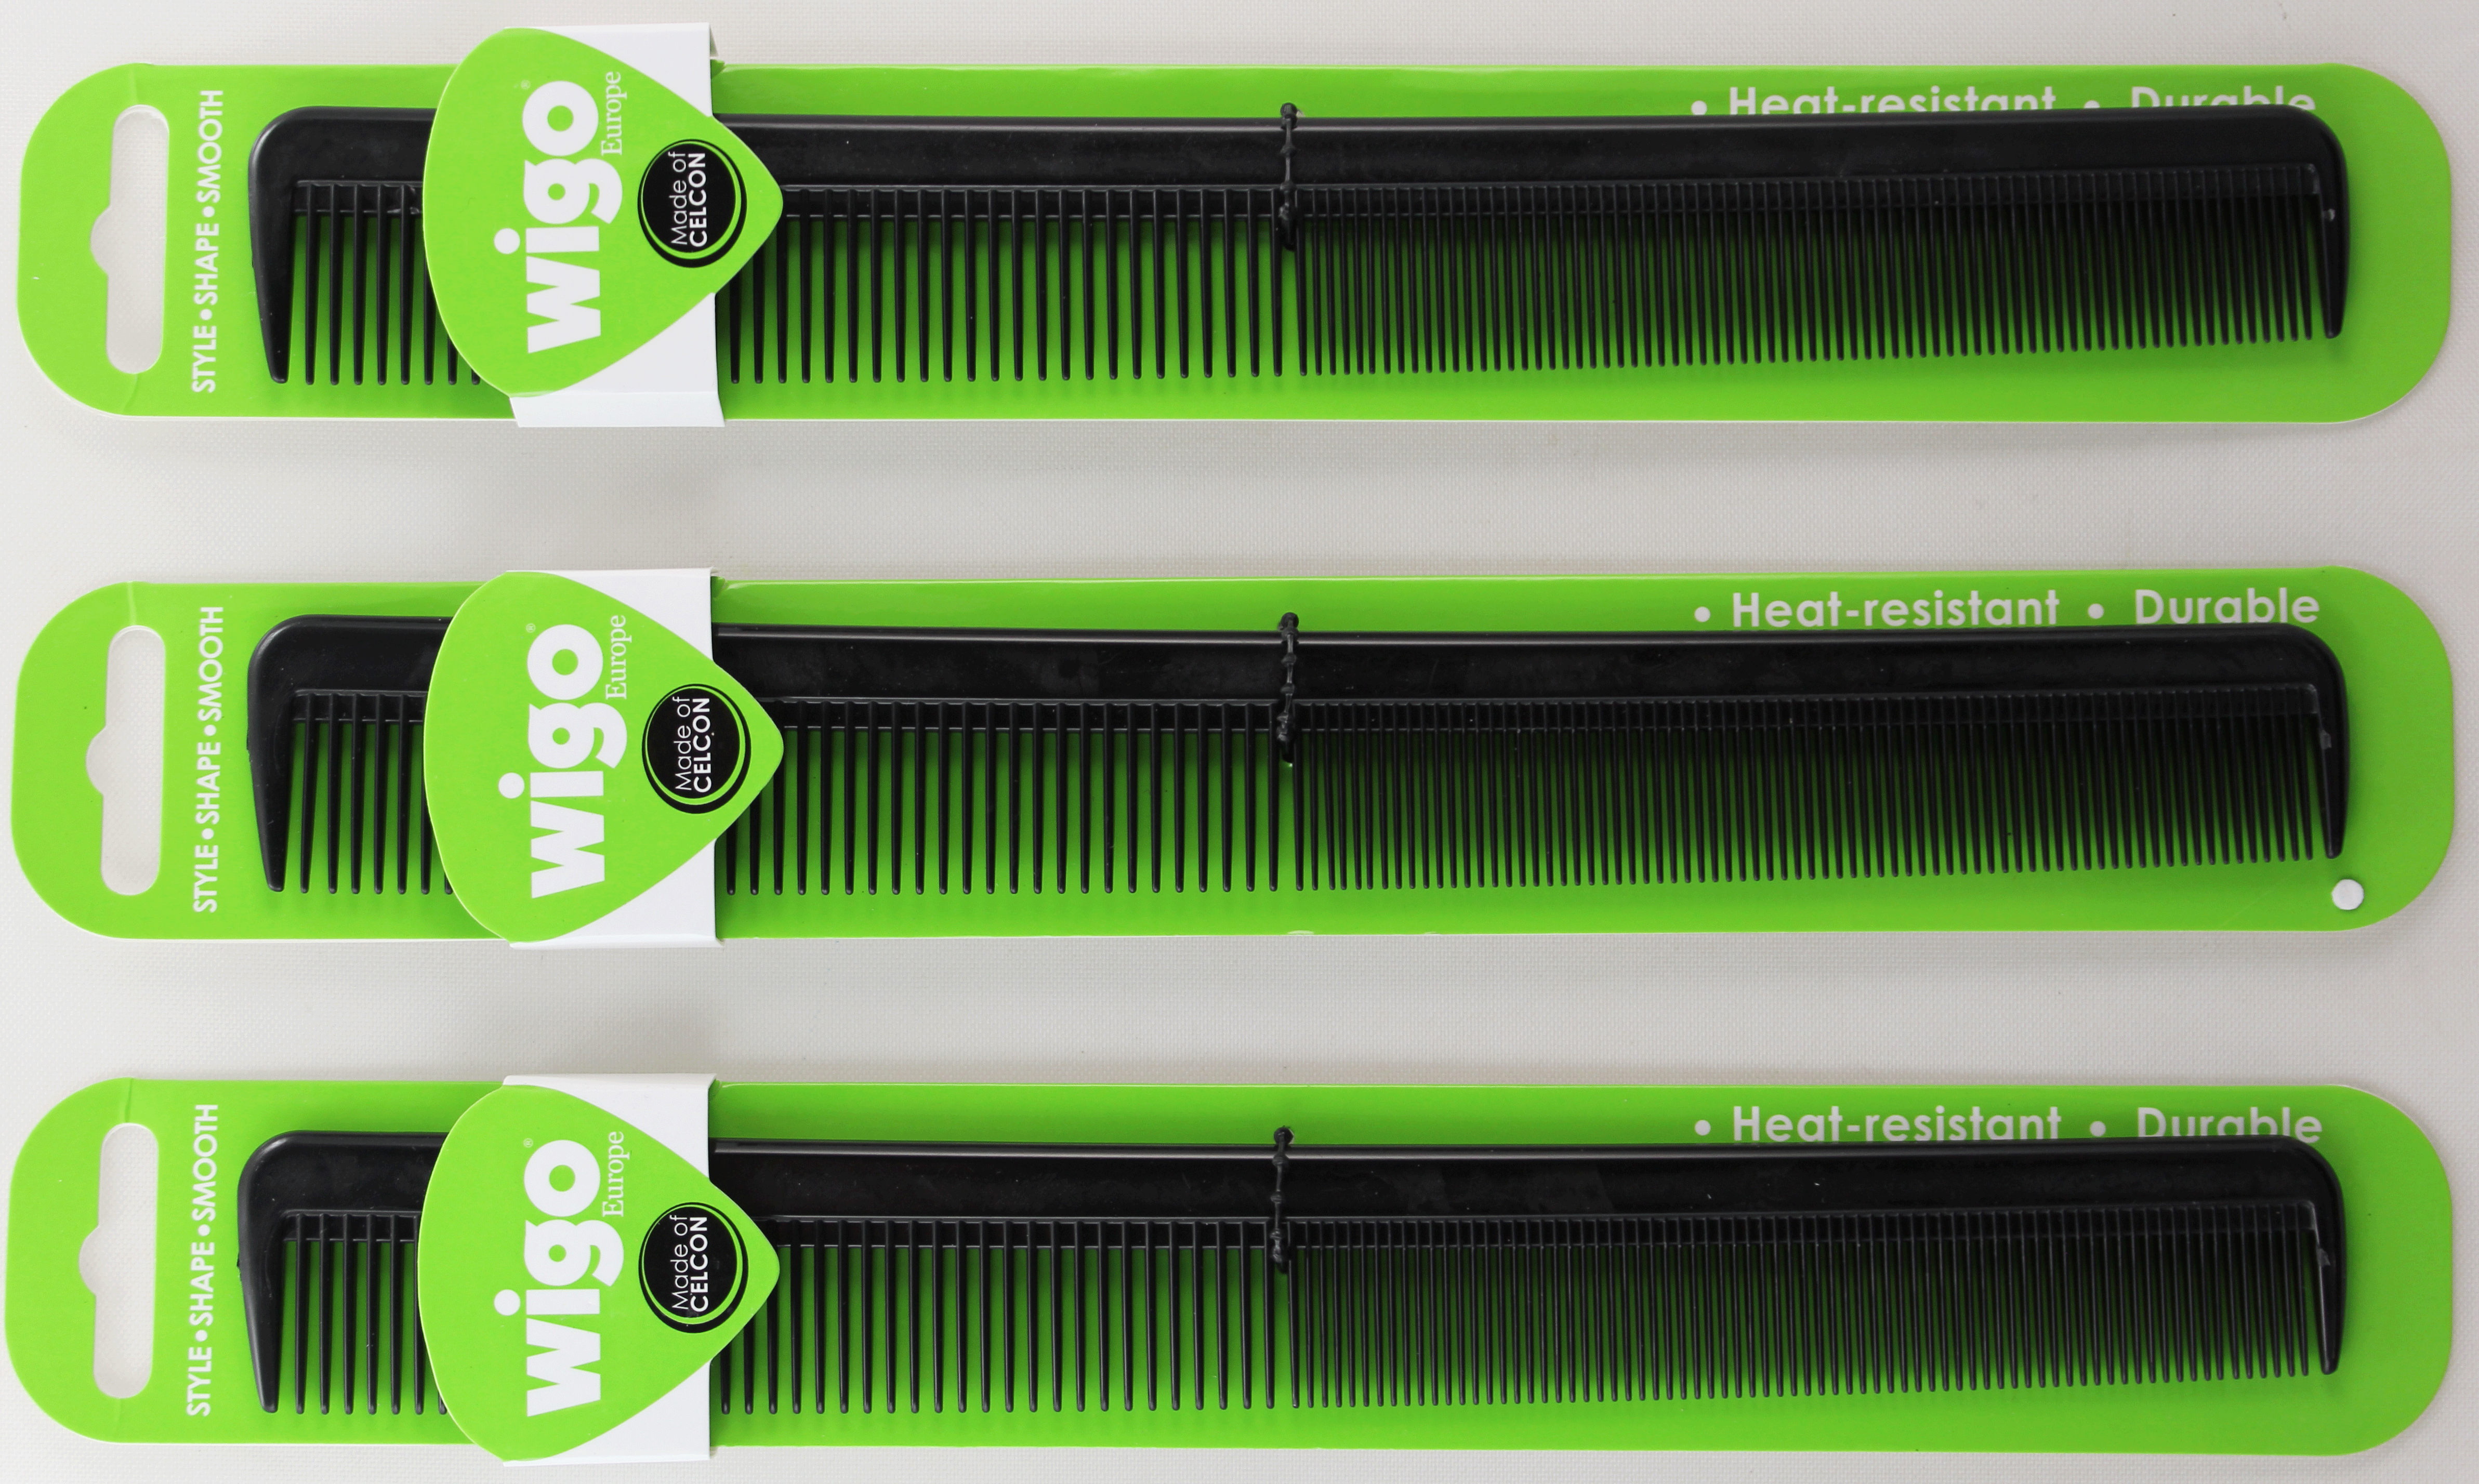 Wigo European Heat Resistant Durability Styling Comb, 1Count